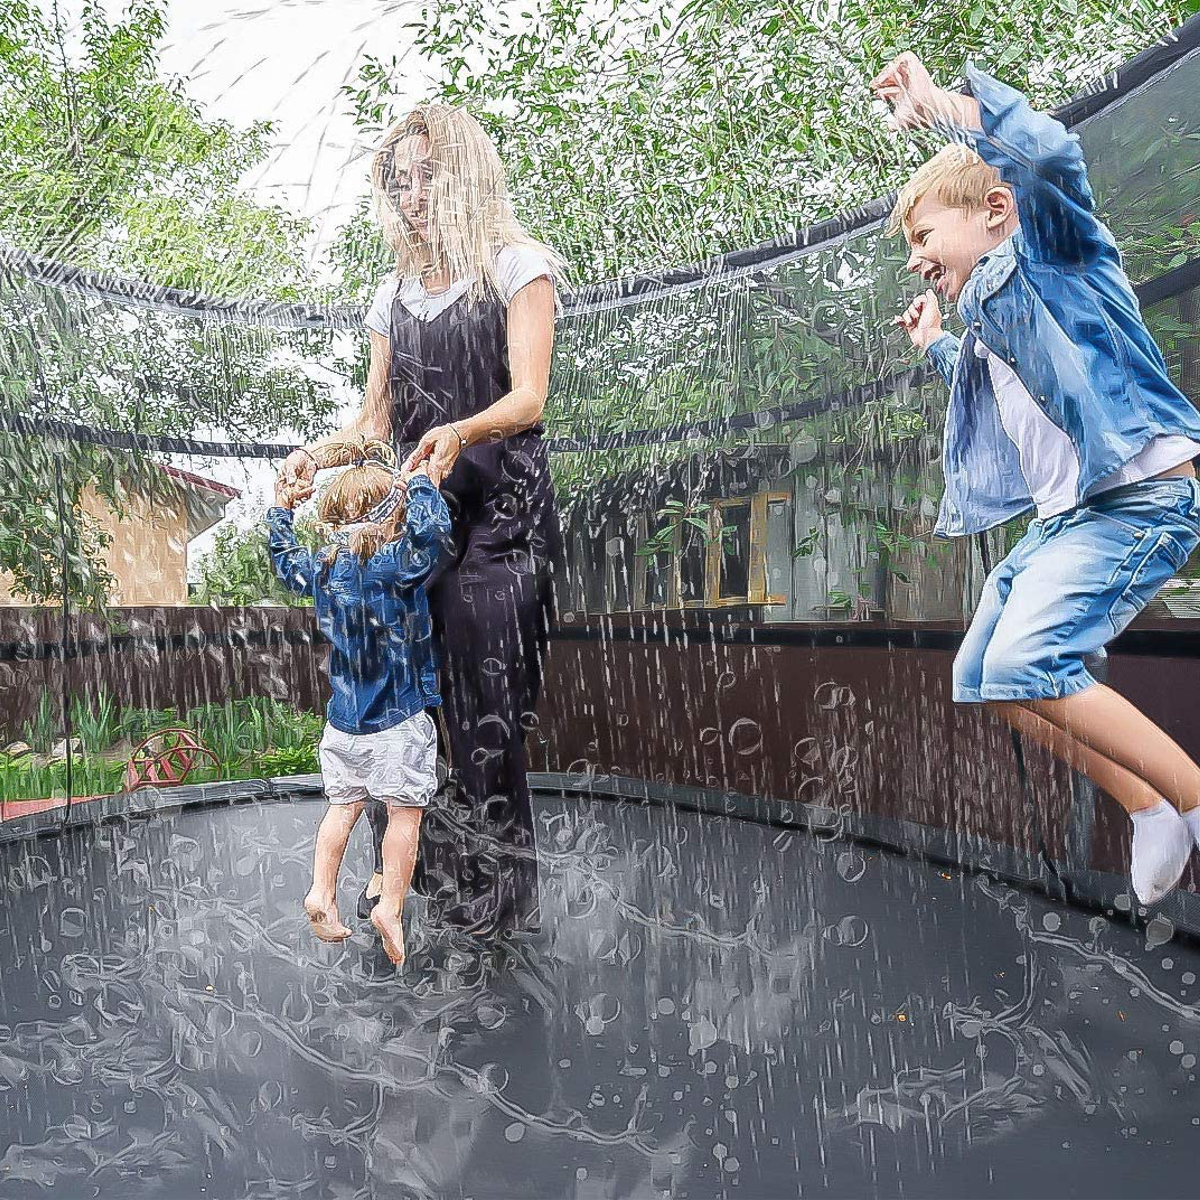 12m-Spray-Hose-Trampoline-Sprinkler-Water-Spray-Kids-Outdoor-Enjoy-Summer-Backyard-Water-Park-Game-1743355-7